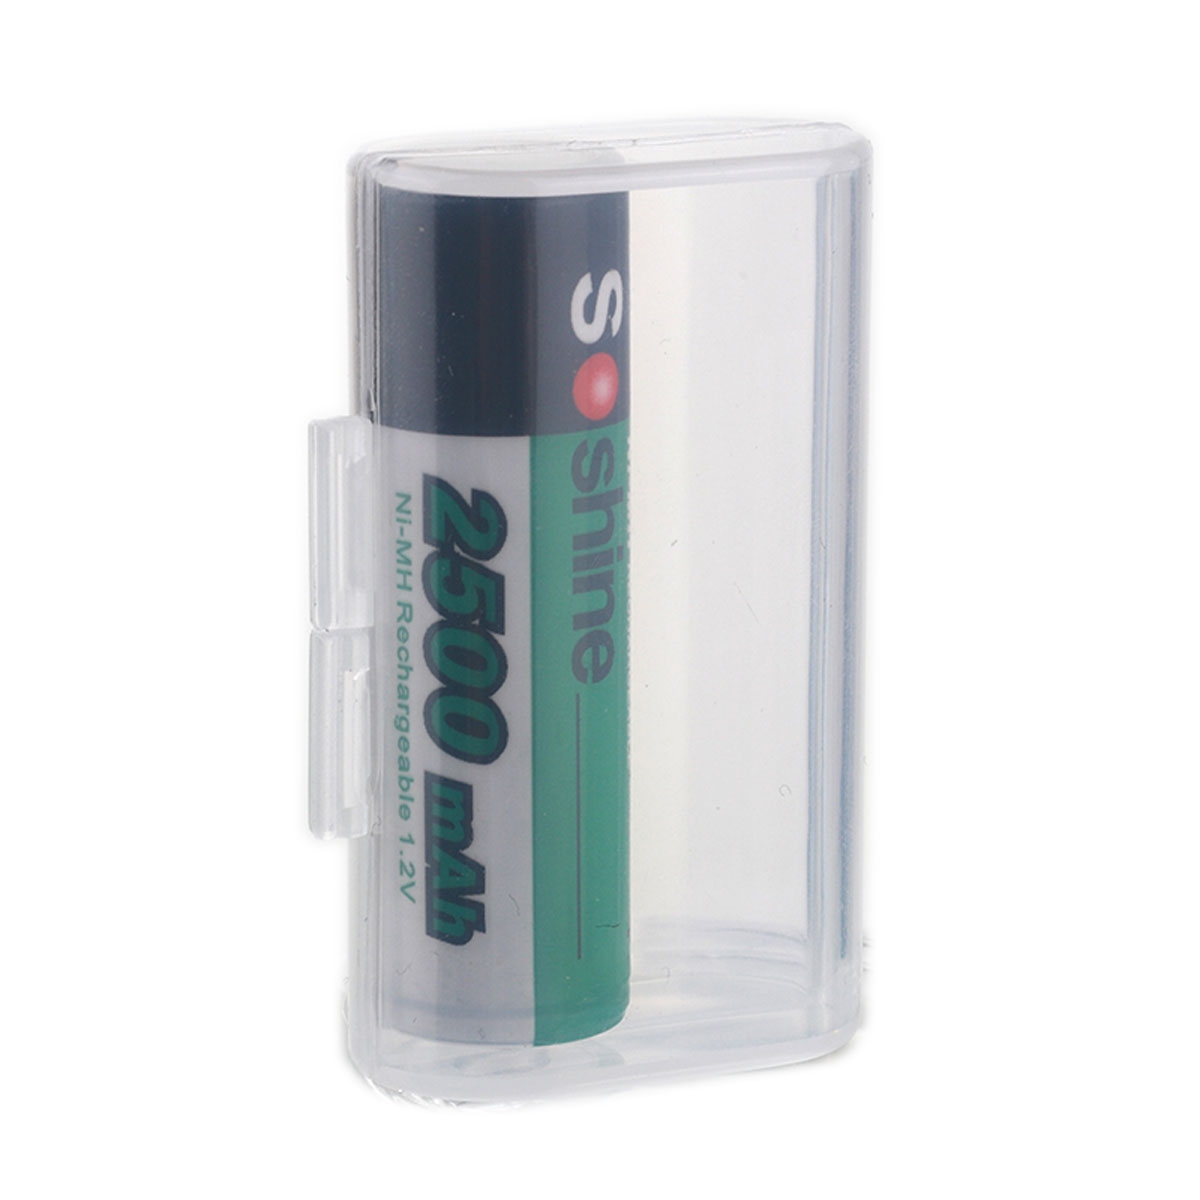 Soshine Batteriebox 2x Mignon (AA), 14500 Soshine SBC-008 (L x B x H) 53.3 x 35.4 x 17.8 mm